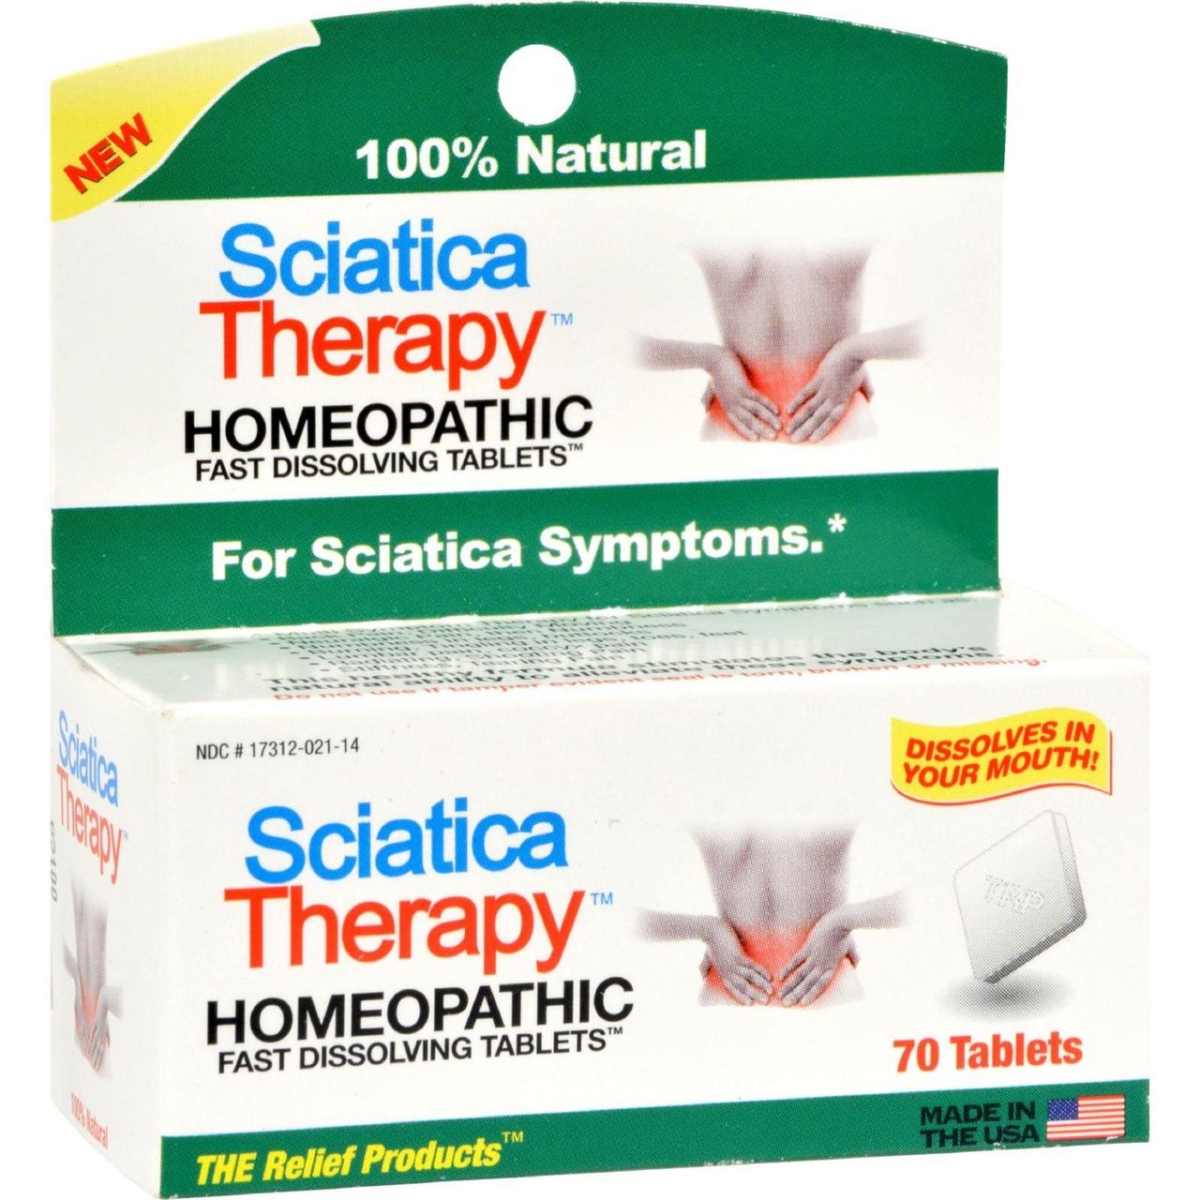 Hg1225820 Sciatica Therapy - 70 Tablets